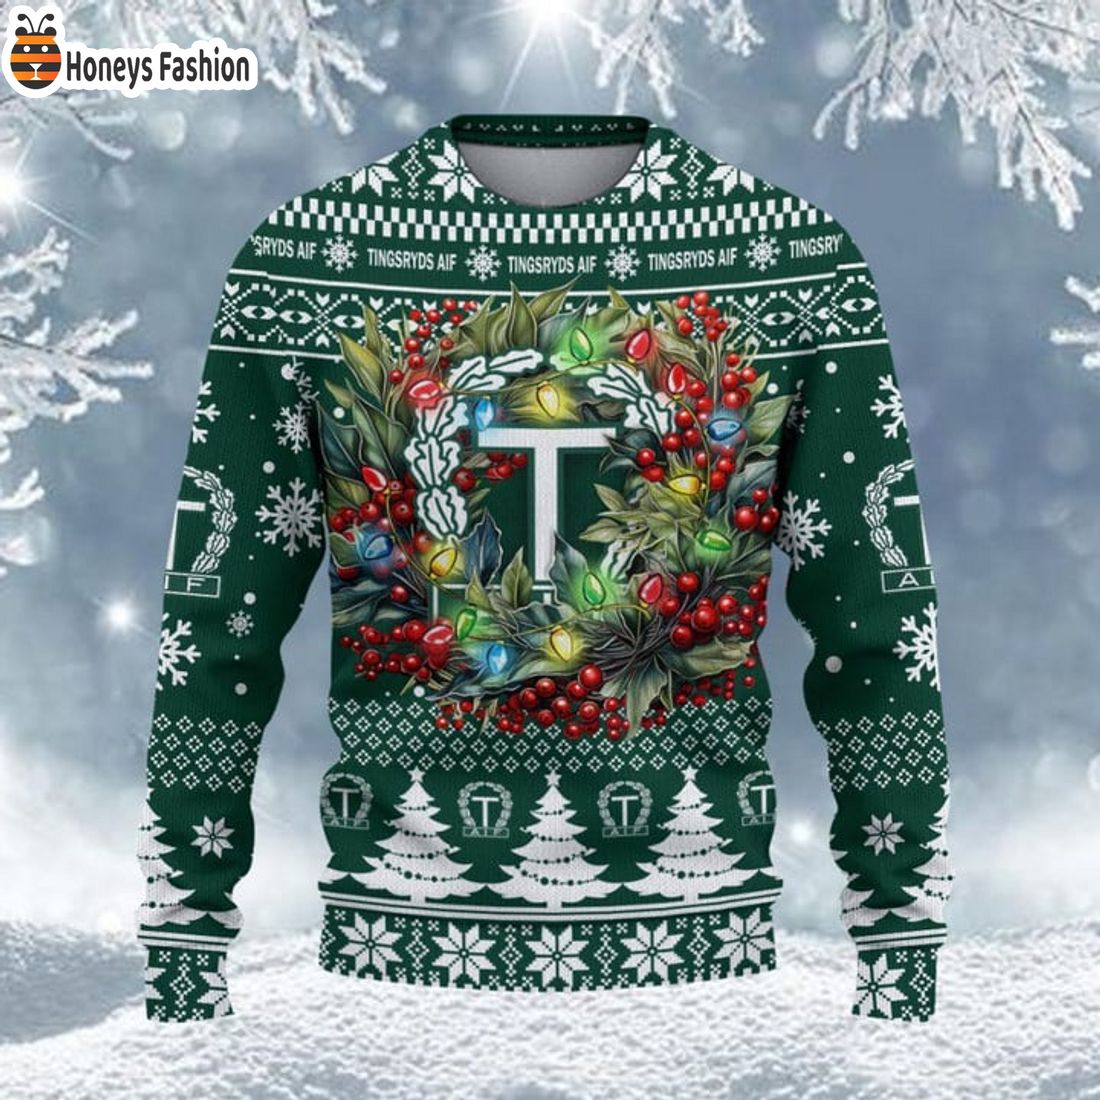 TRENDING Tingsryds AIF SHL & HockeyAllsvenskan Ugly Christmas Sweater